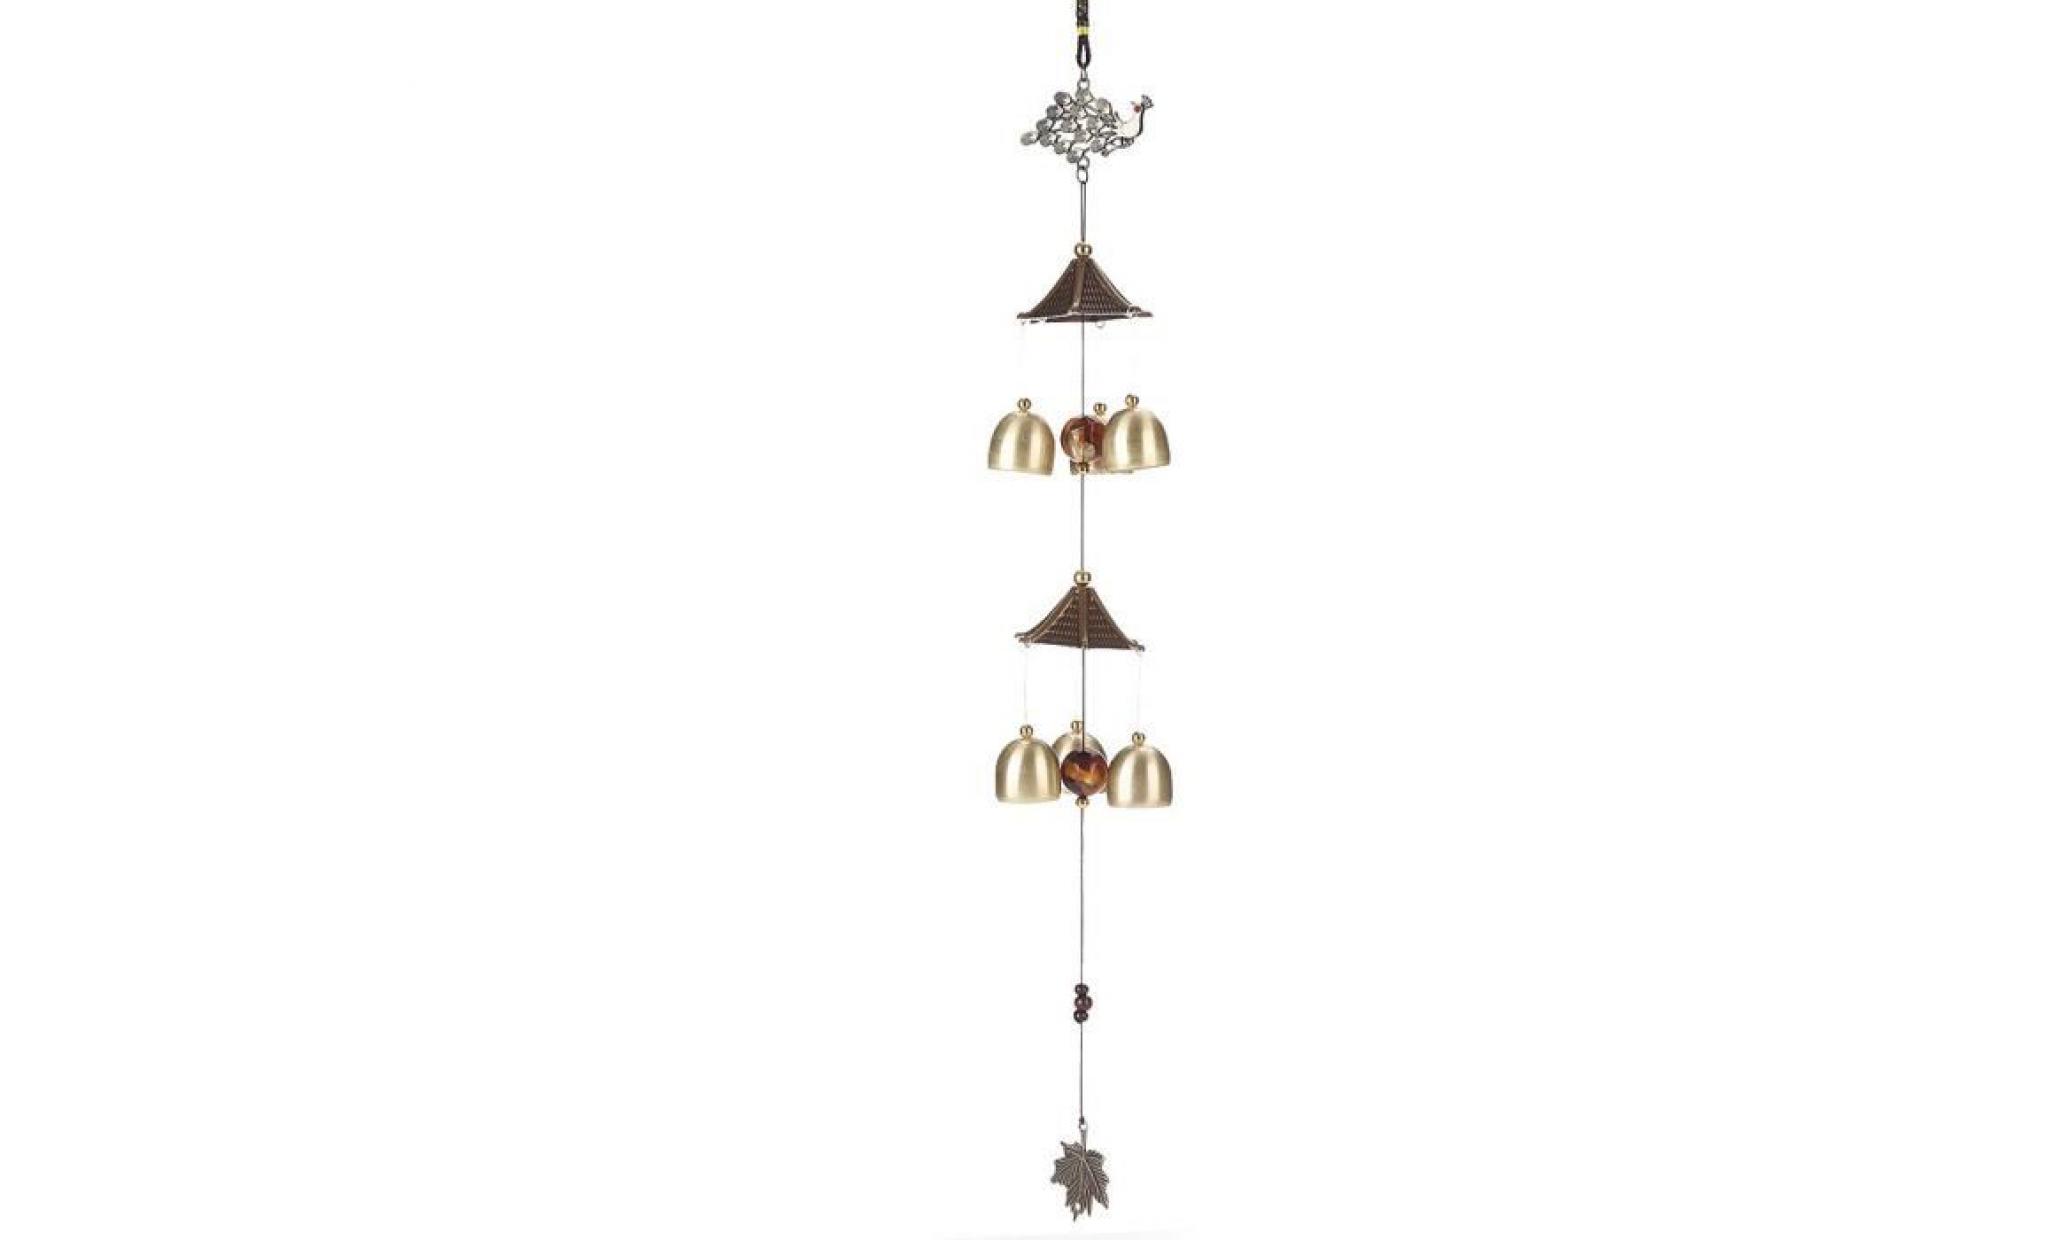 amazing carillon grace collection grand son couleur bronze cloches vent carillons   cff70326401d